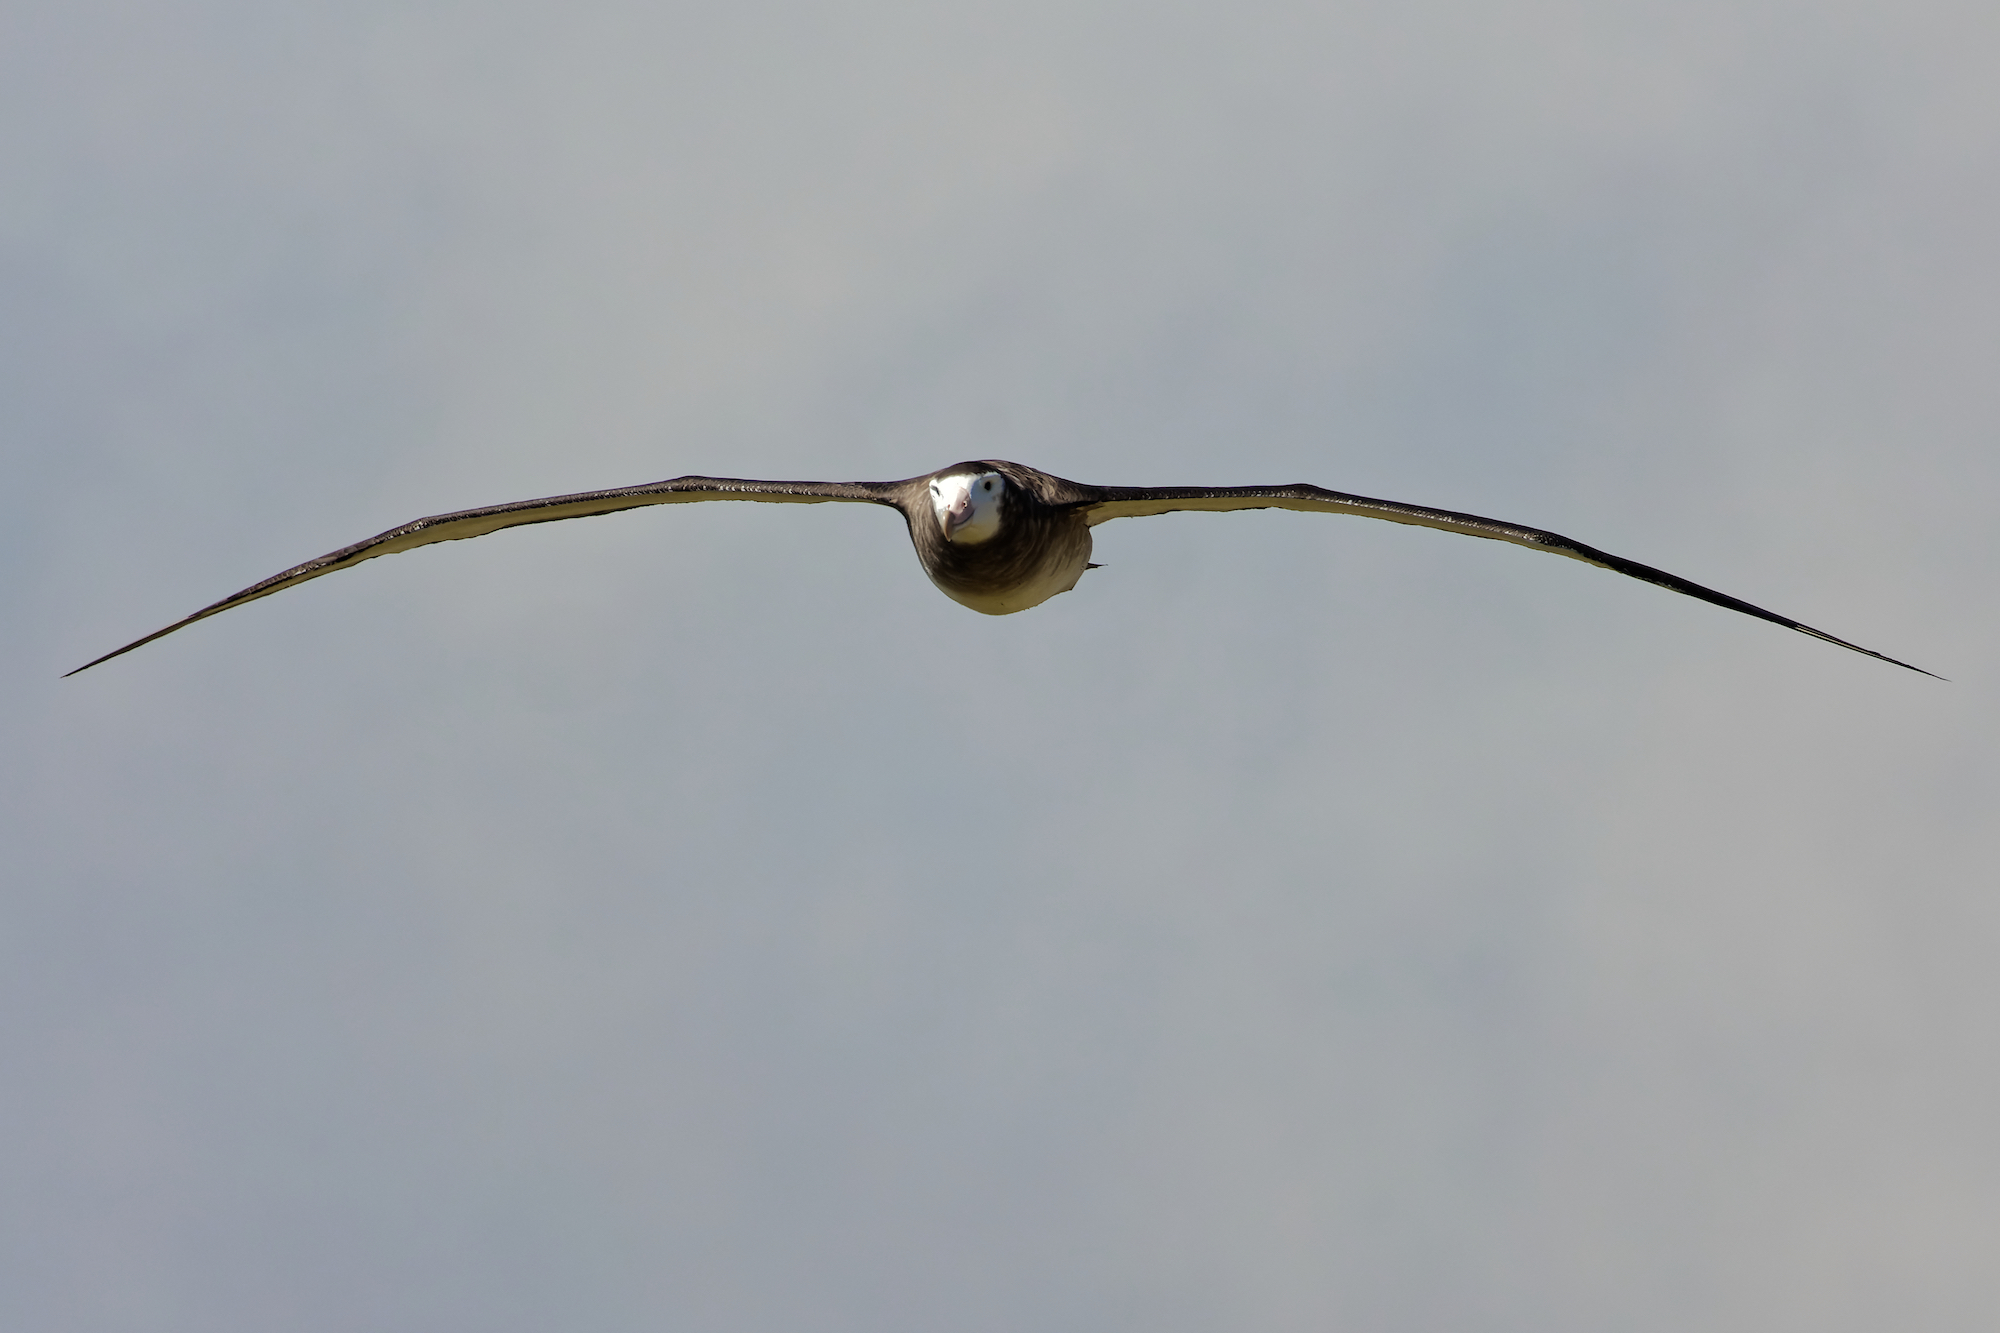 Albatros d'Amsterdam